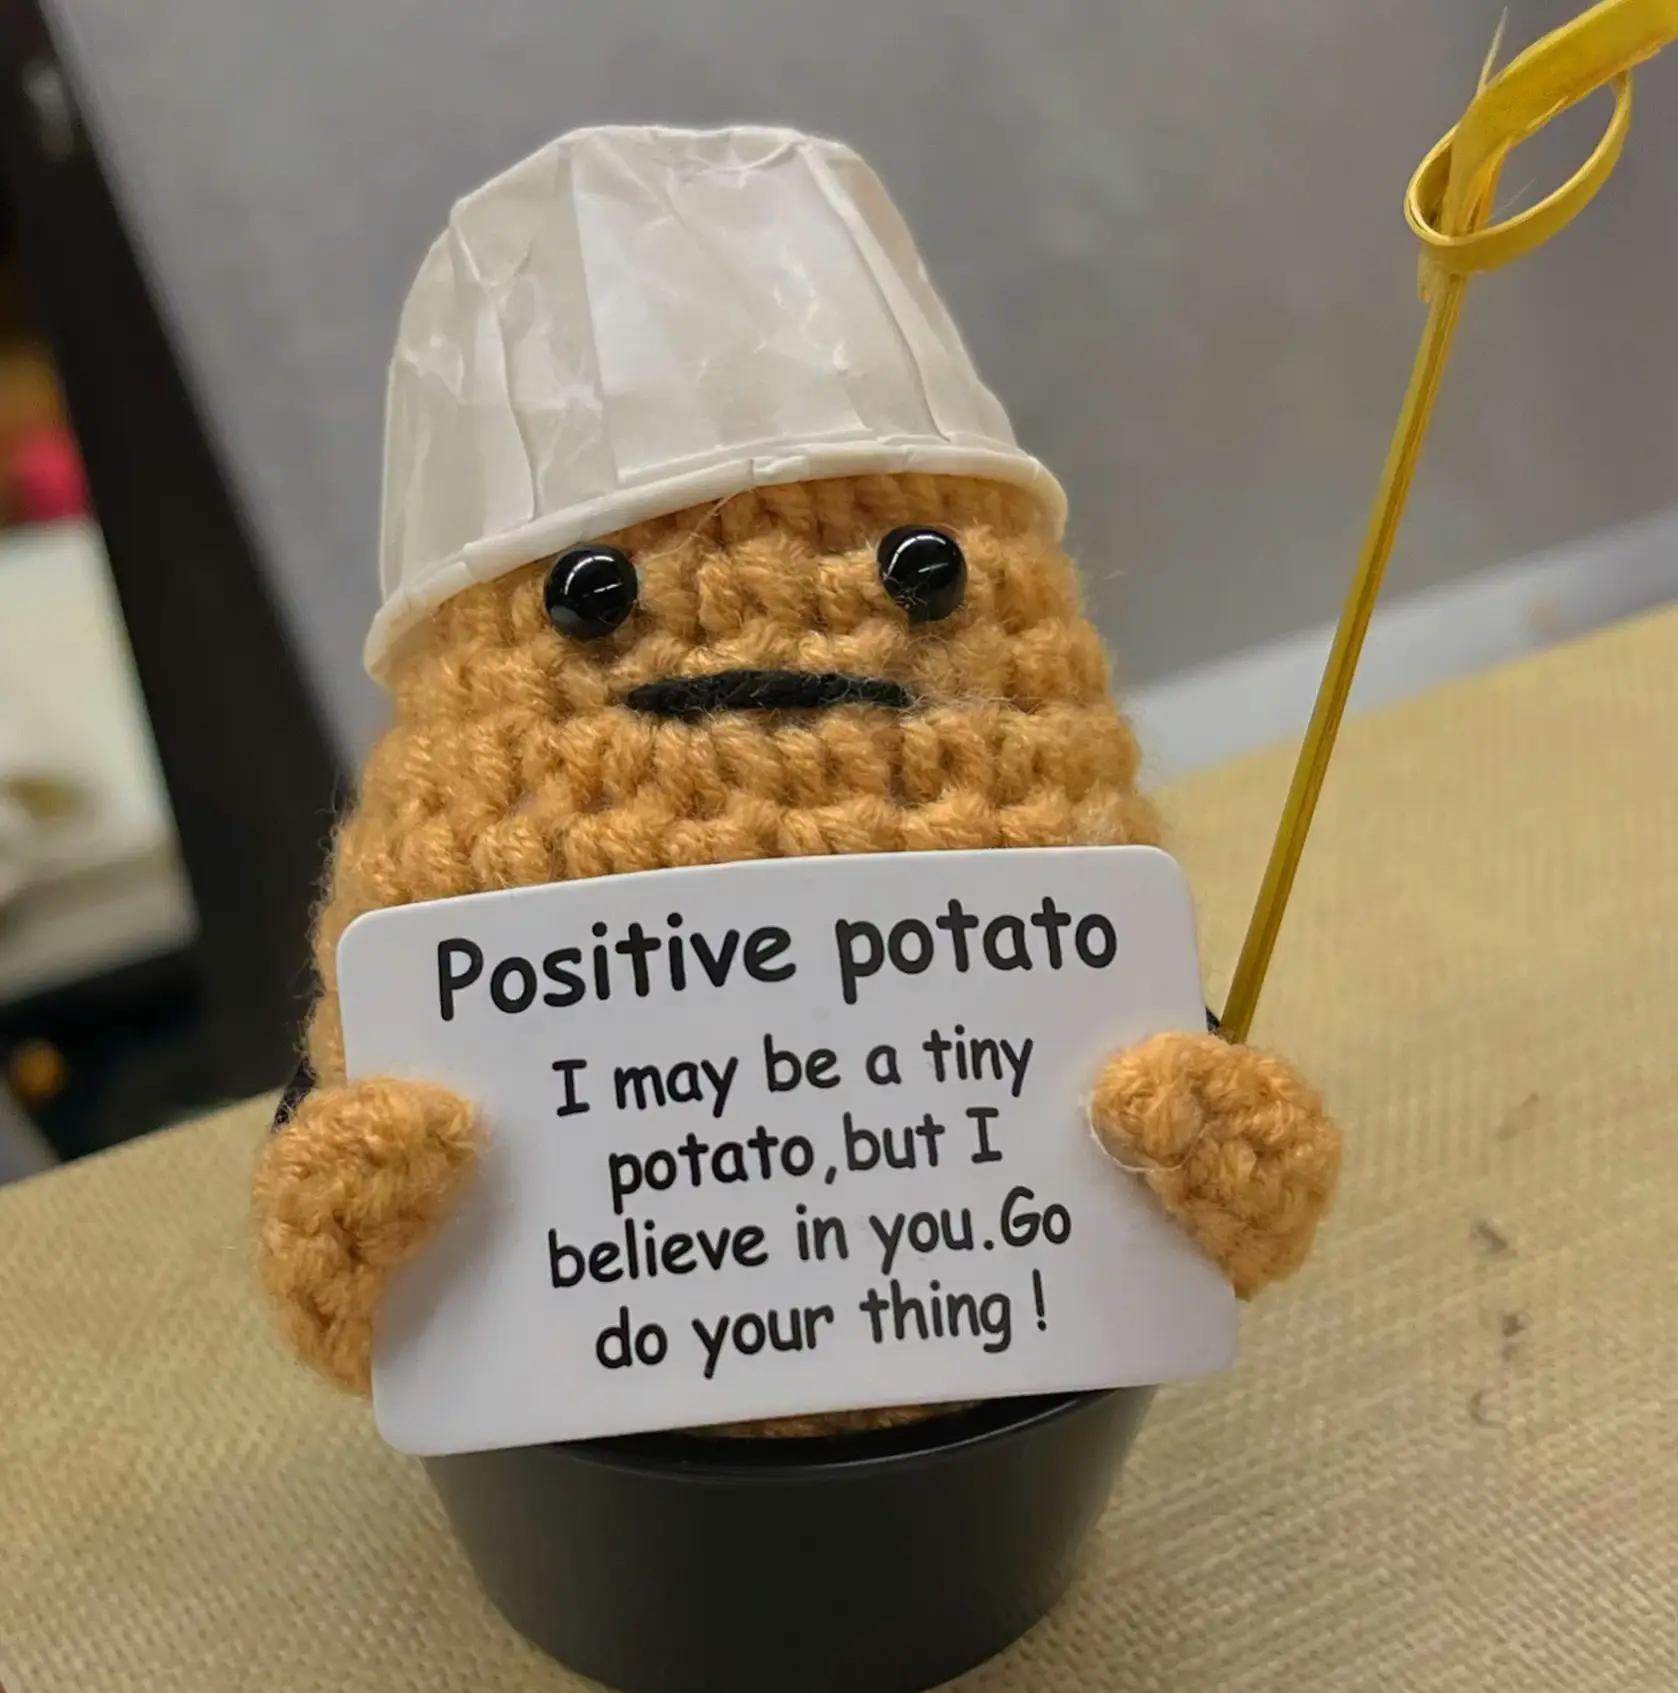 Positive Potato, Gallery posted by cozycatcrochet